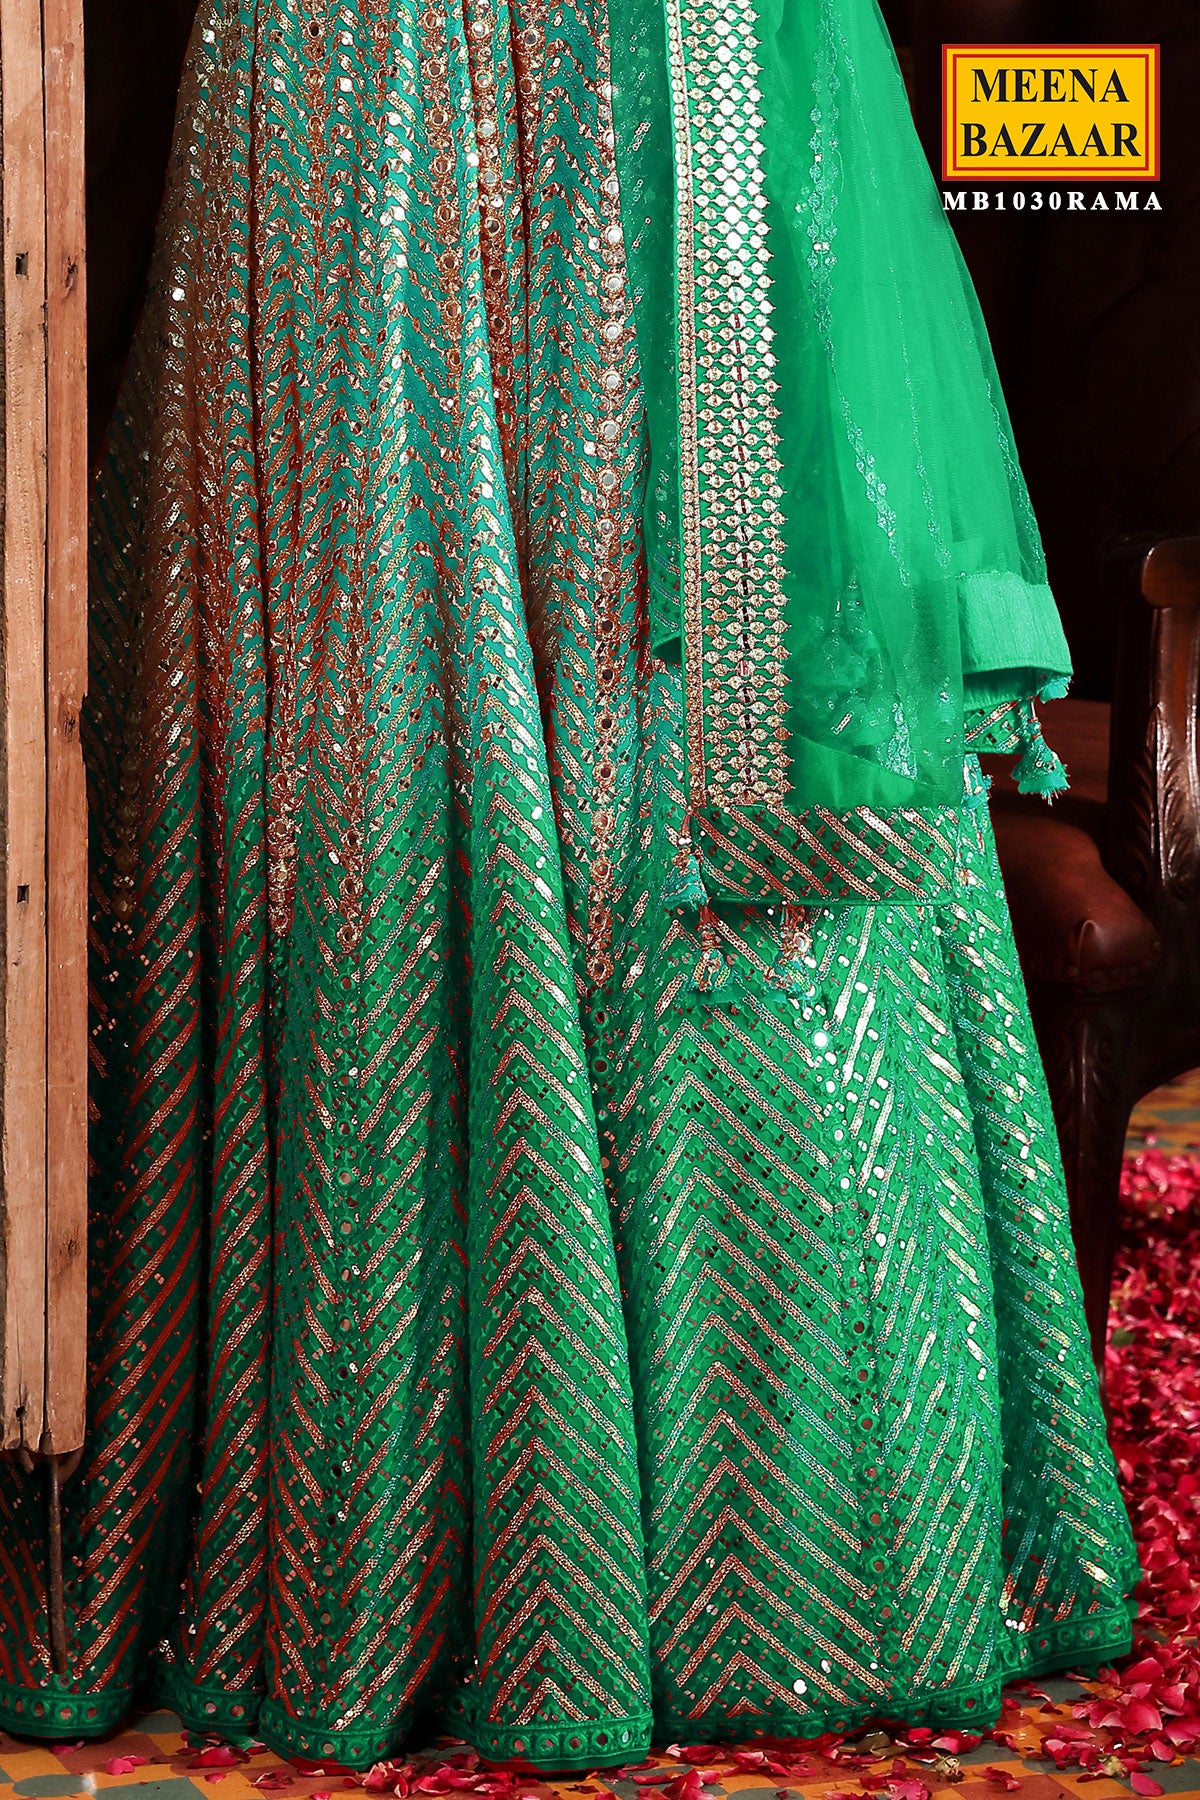 Meena bazaar lehenga in Chennai | Clasf fashion